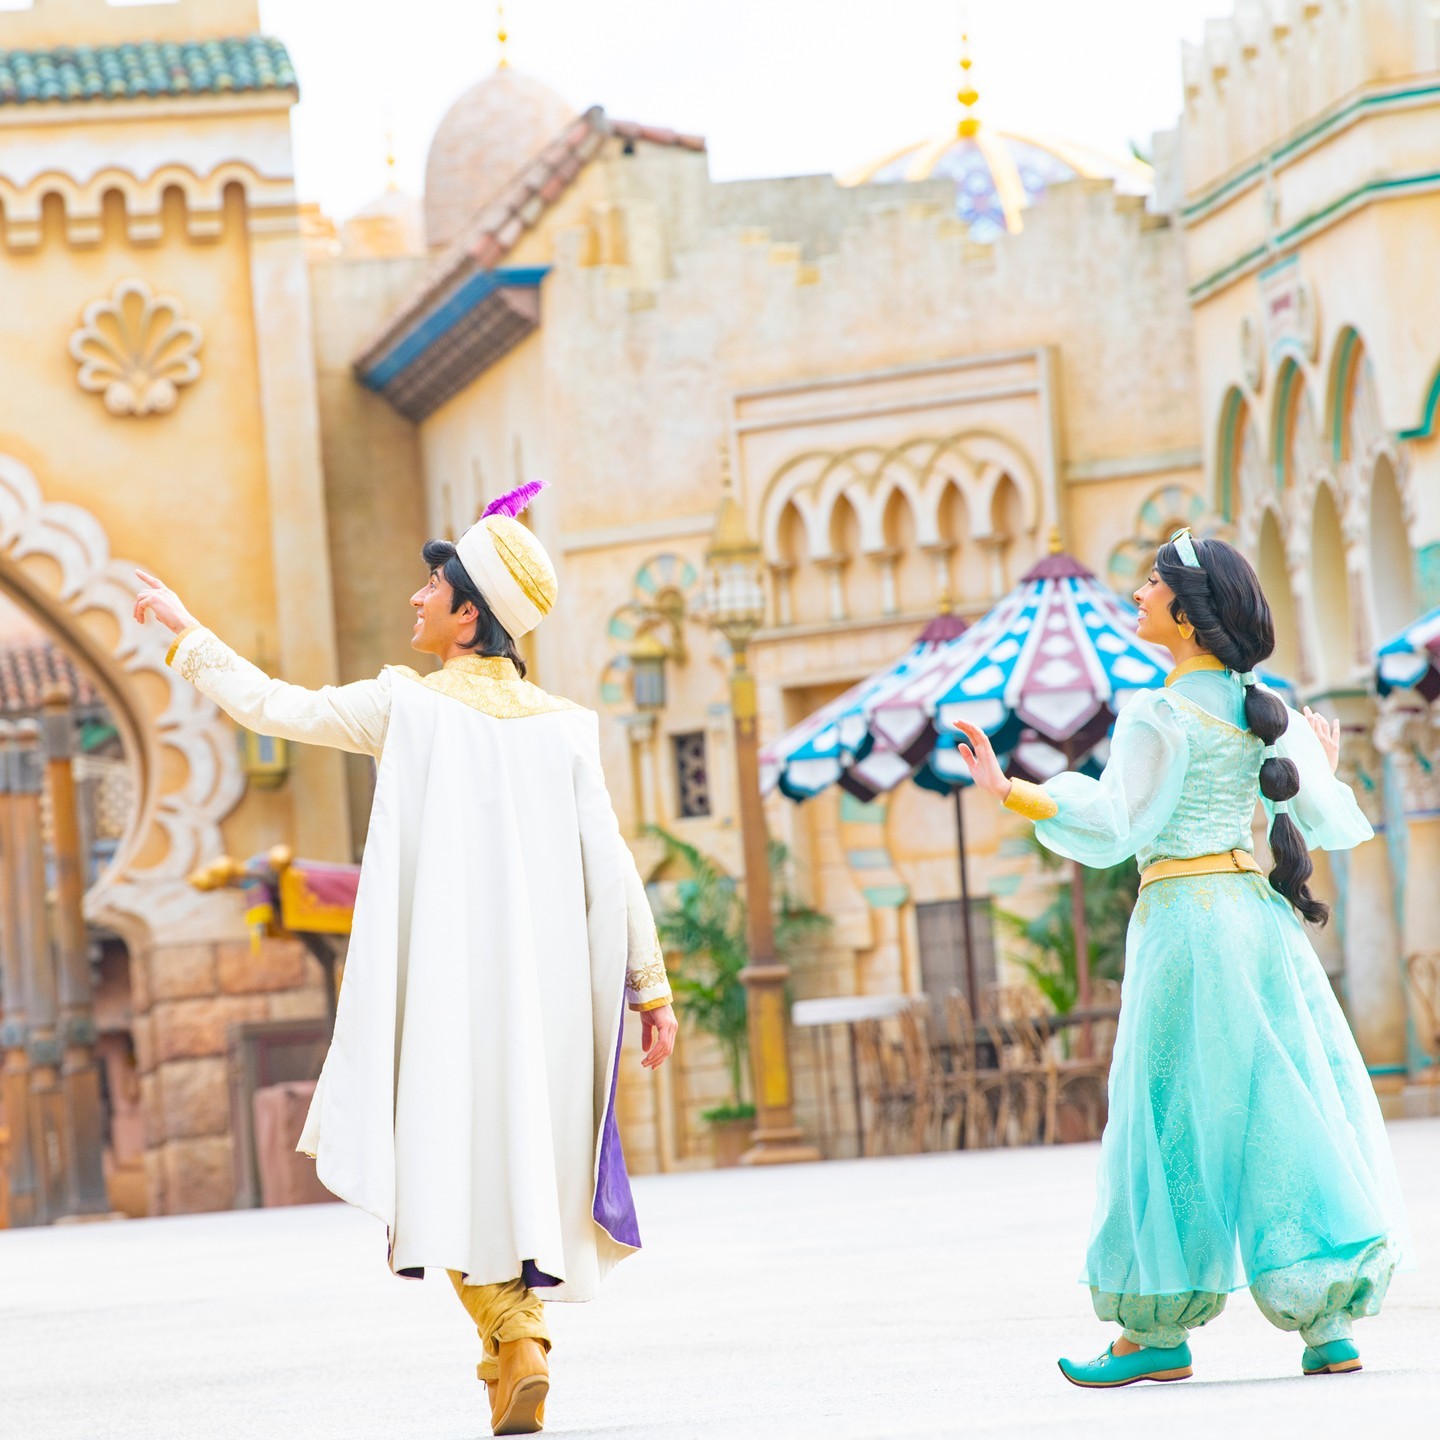 Aladdin,what did you find?
2人なら、どこでも素敵な発見が♡
#jasmine #aladdin #arabiancoast... 이미지